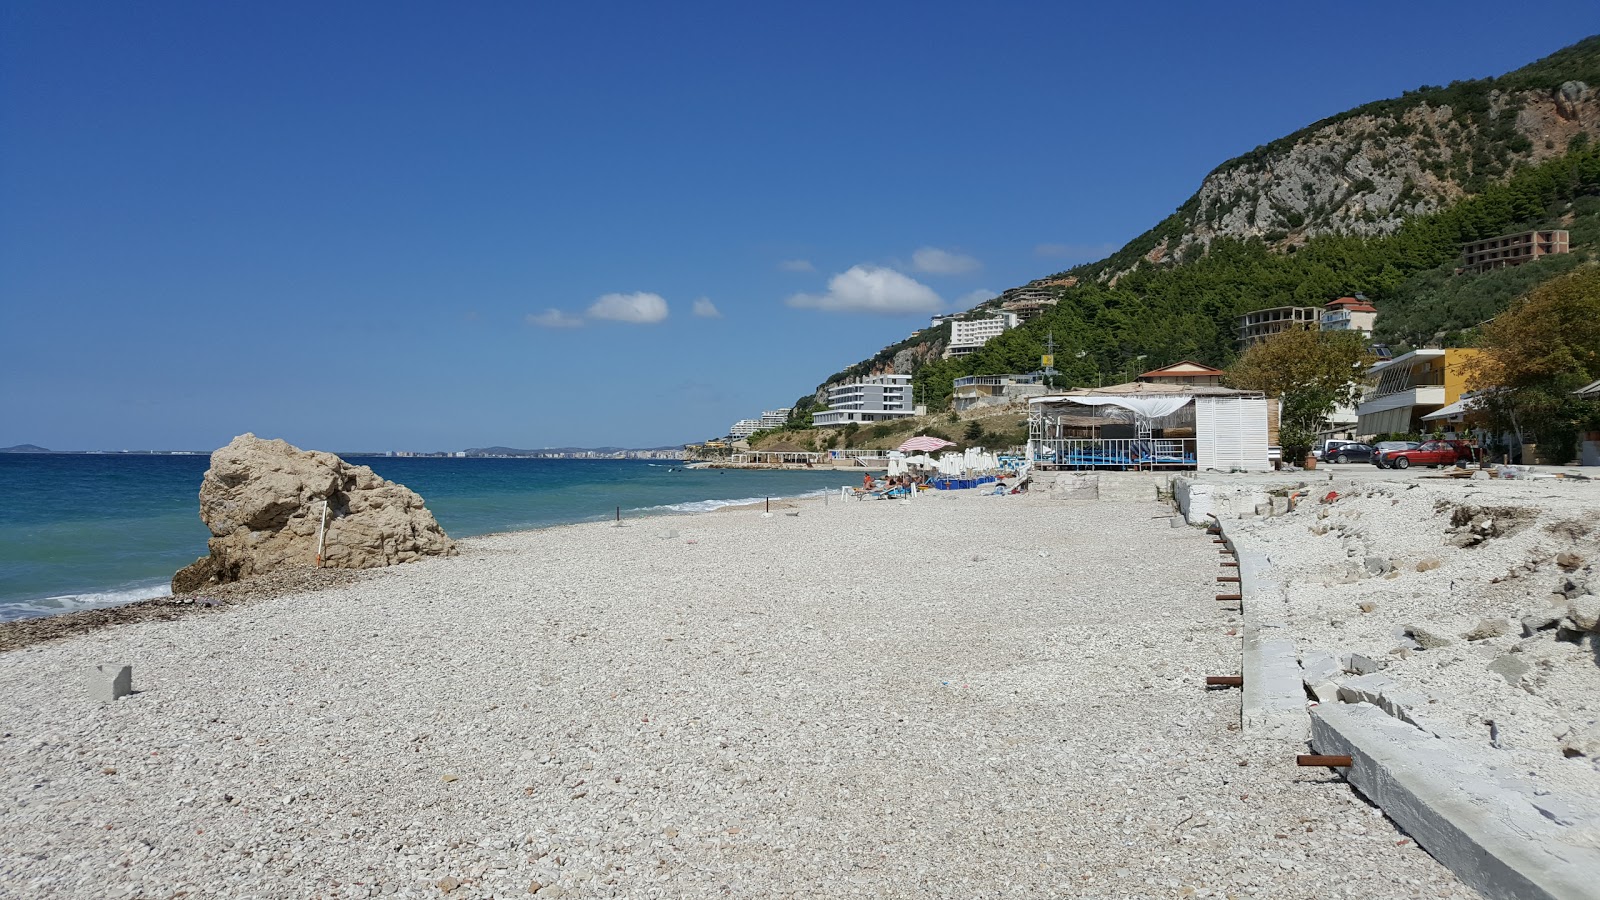 Photo of Sunny beach beach resort area